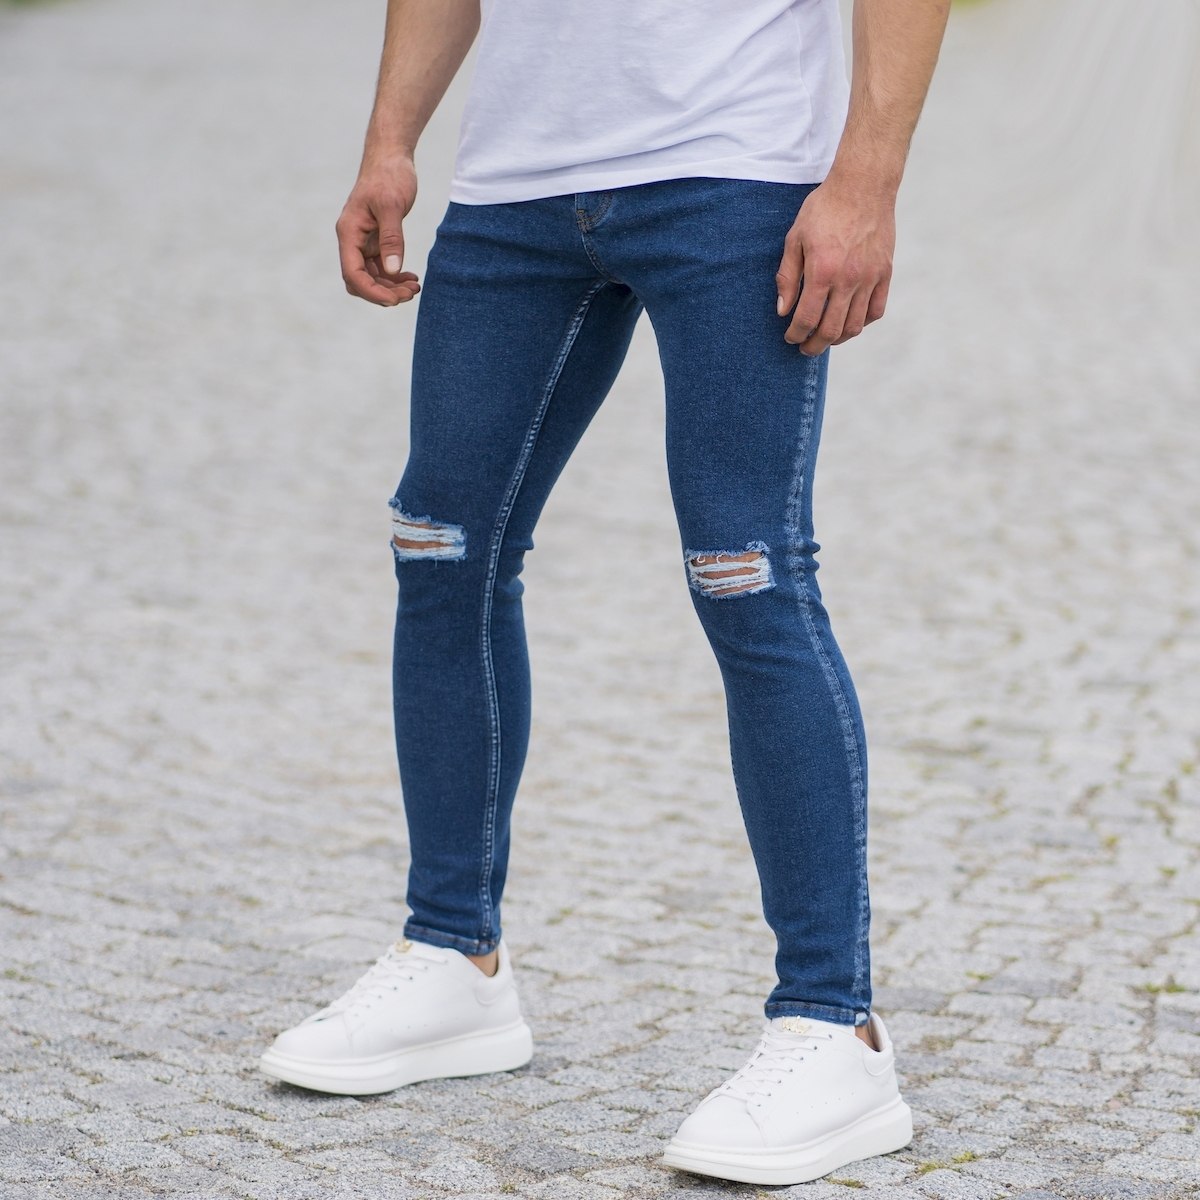 Herren Skinny Jeans mit Rissen in dunkelblau - 5